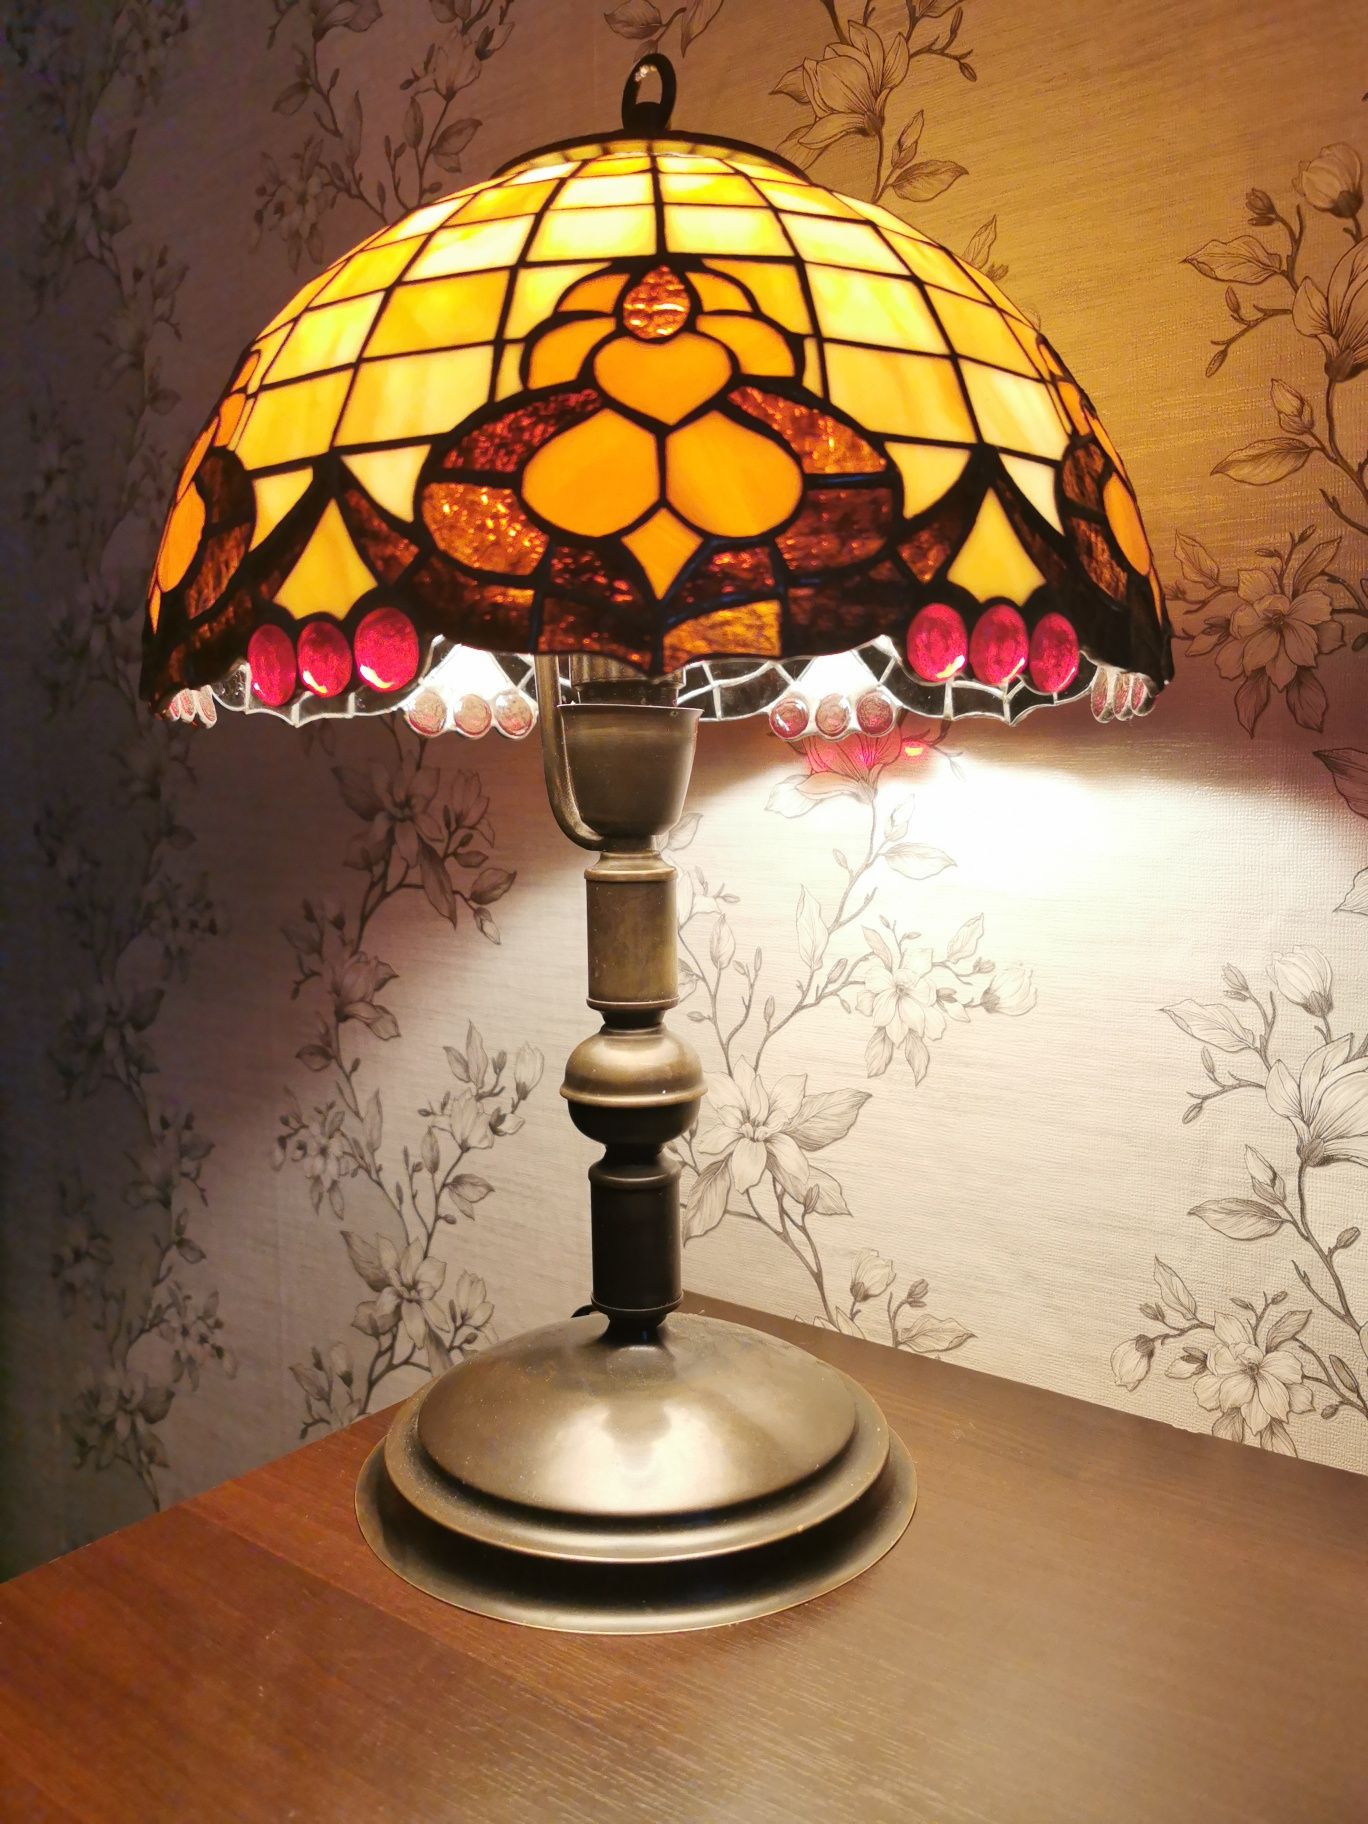 Lampa stojąca typu Tiffany